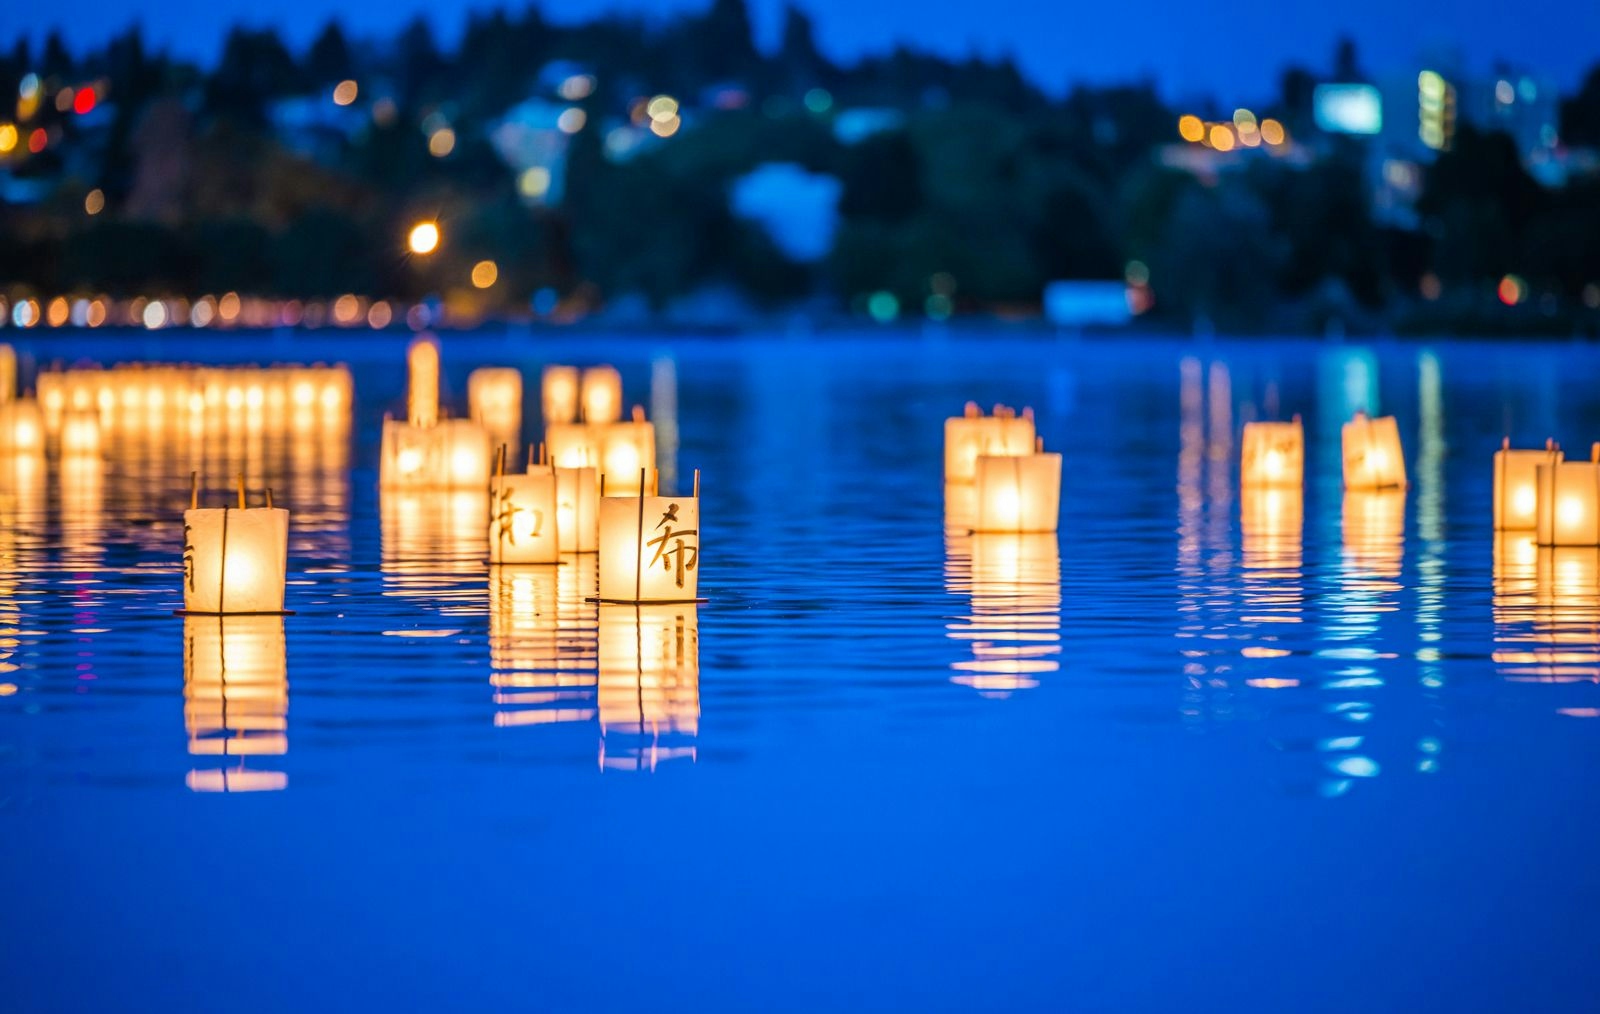 Warm box shaped lanterns floating on still blue water